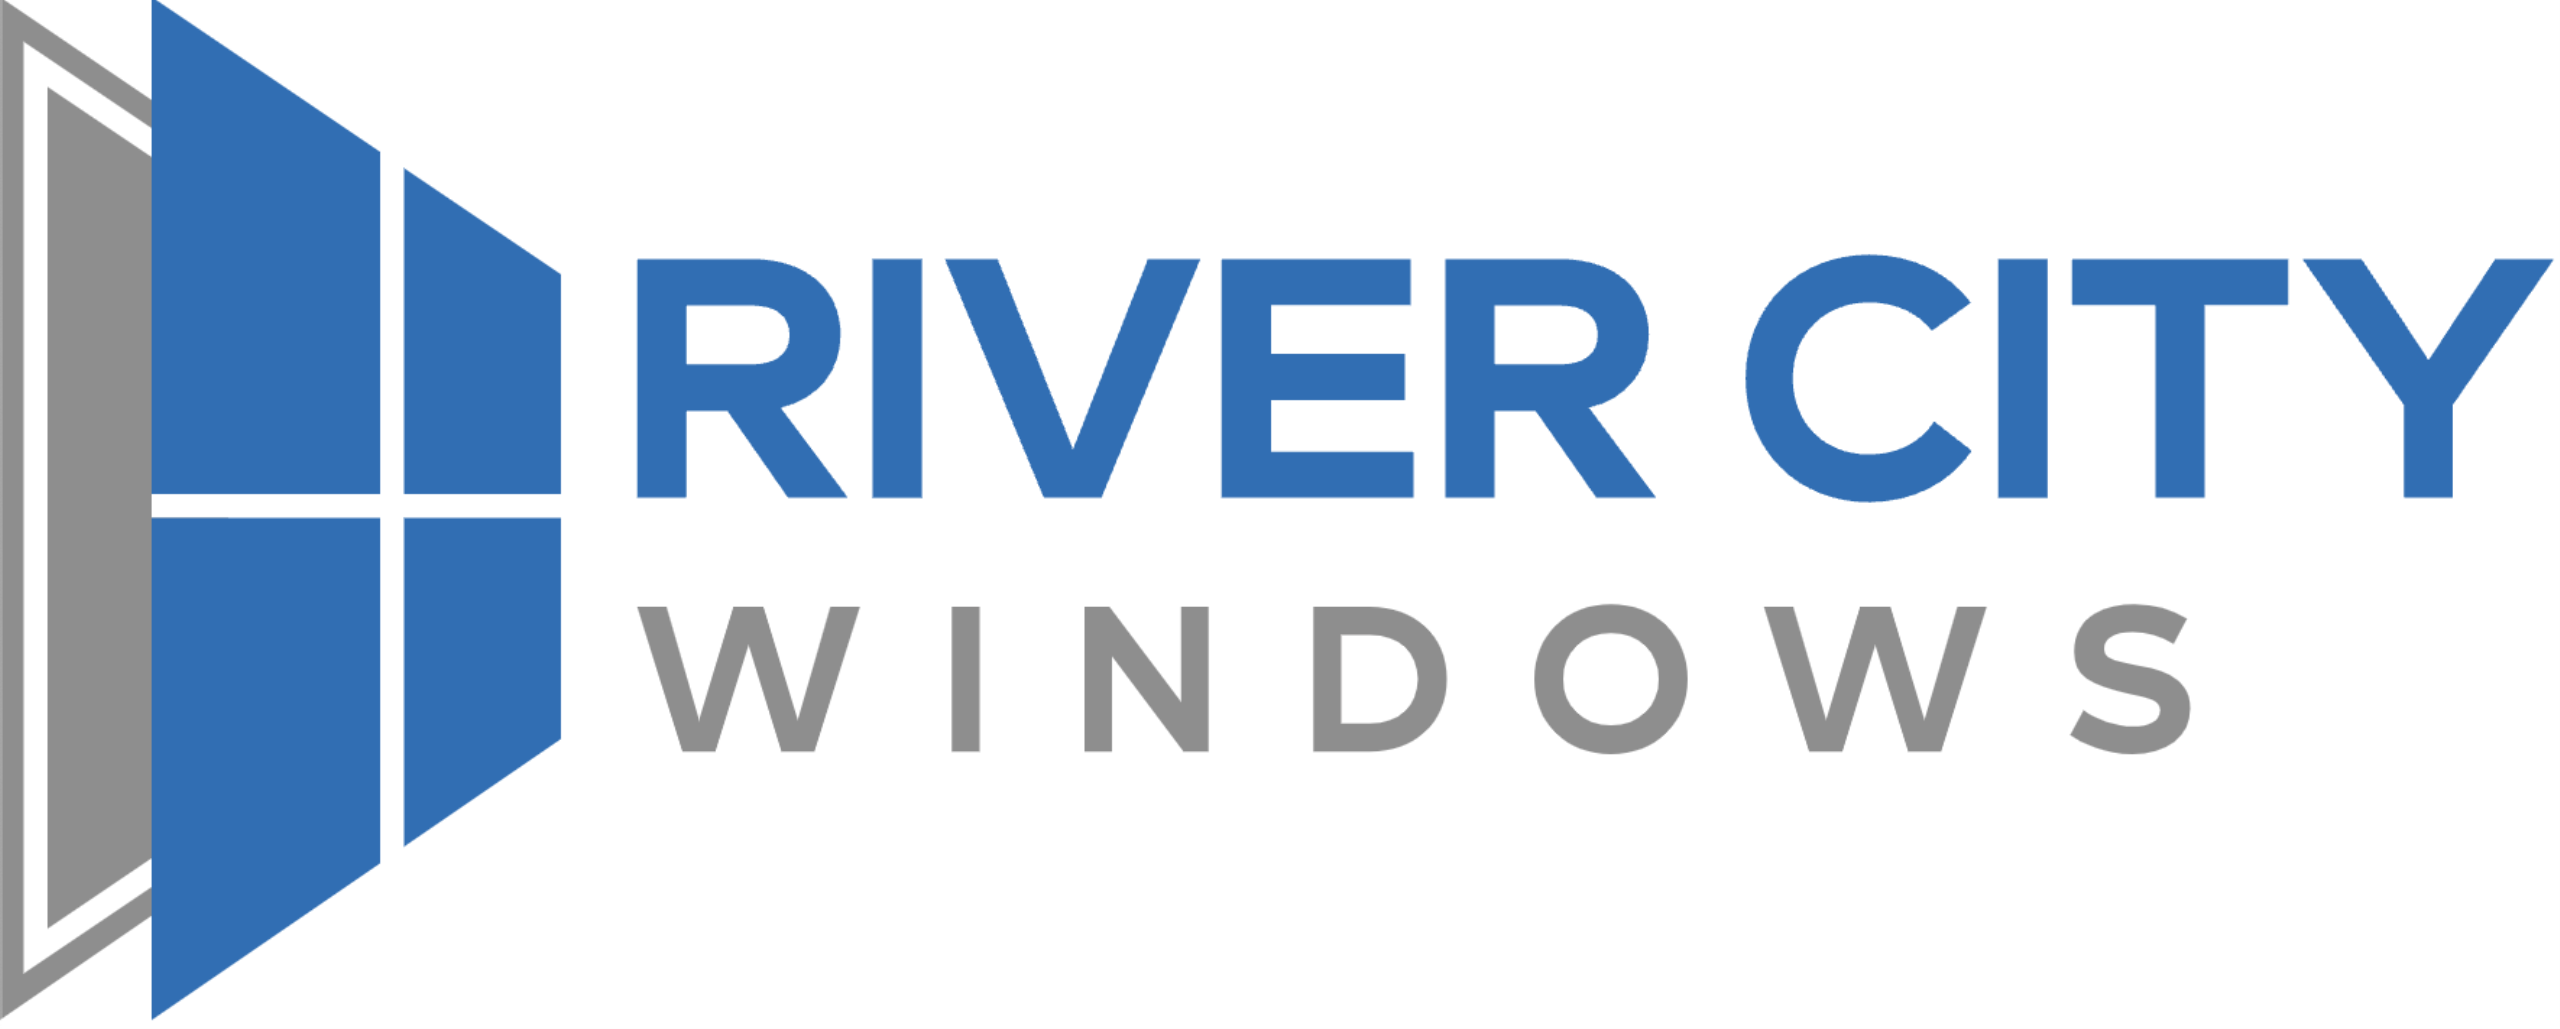 River City Windows Logo